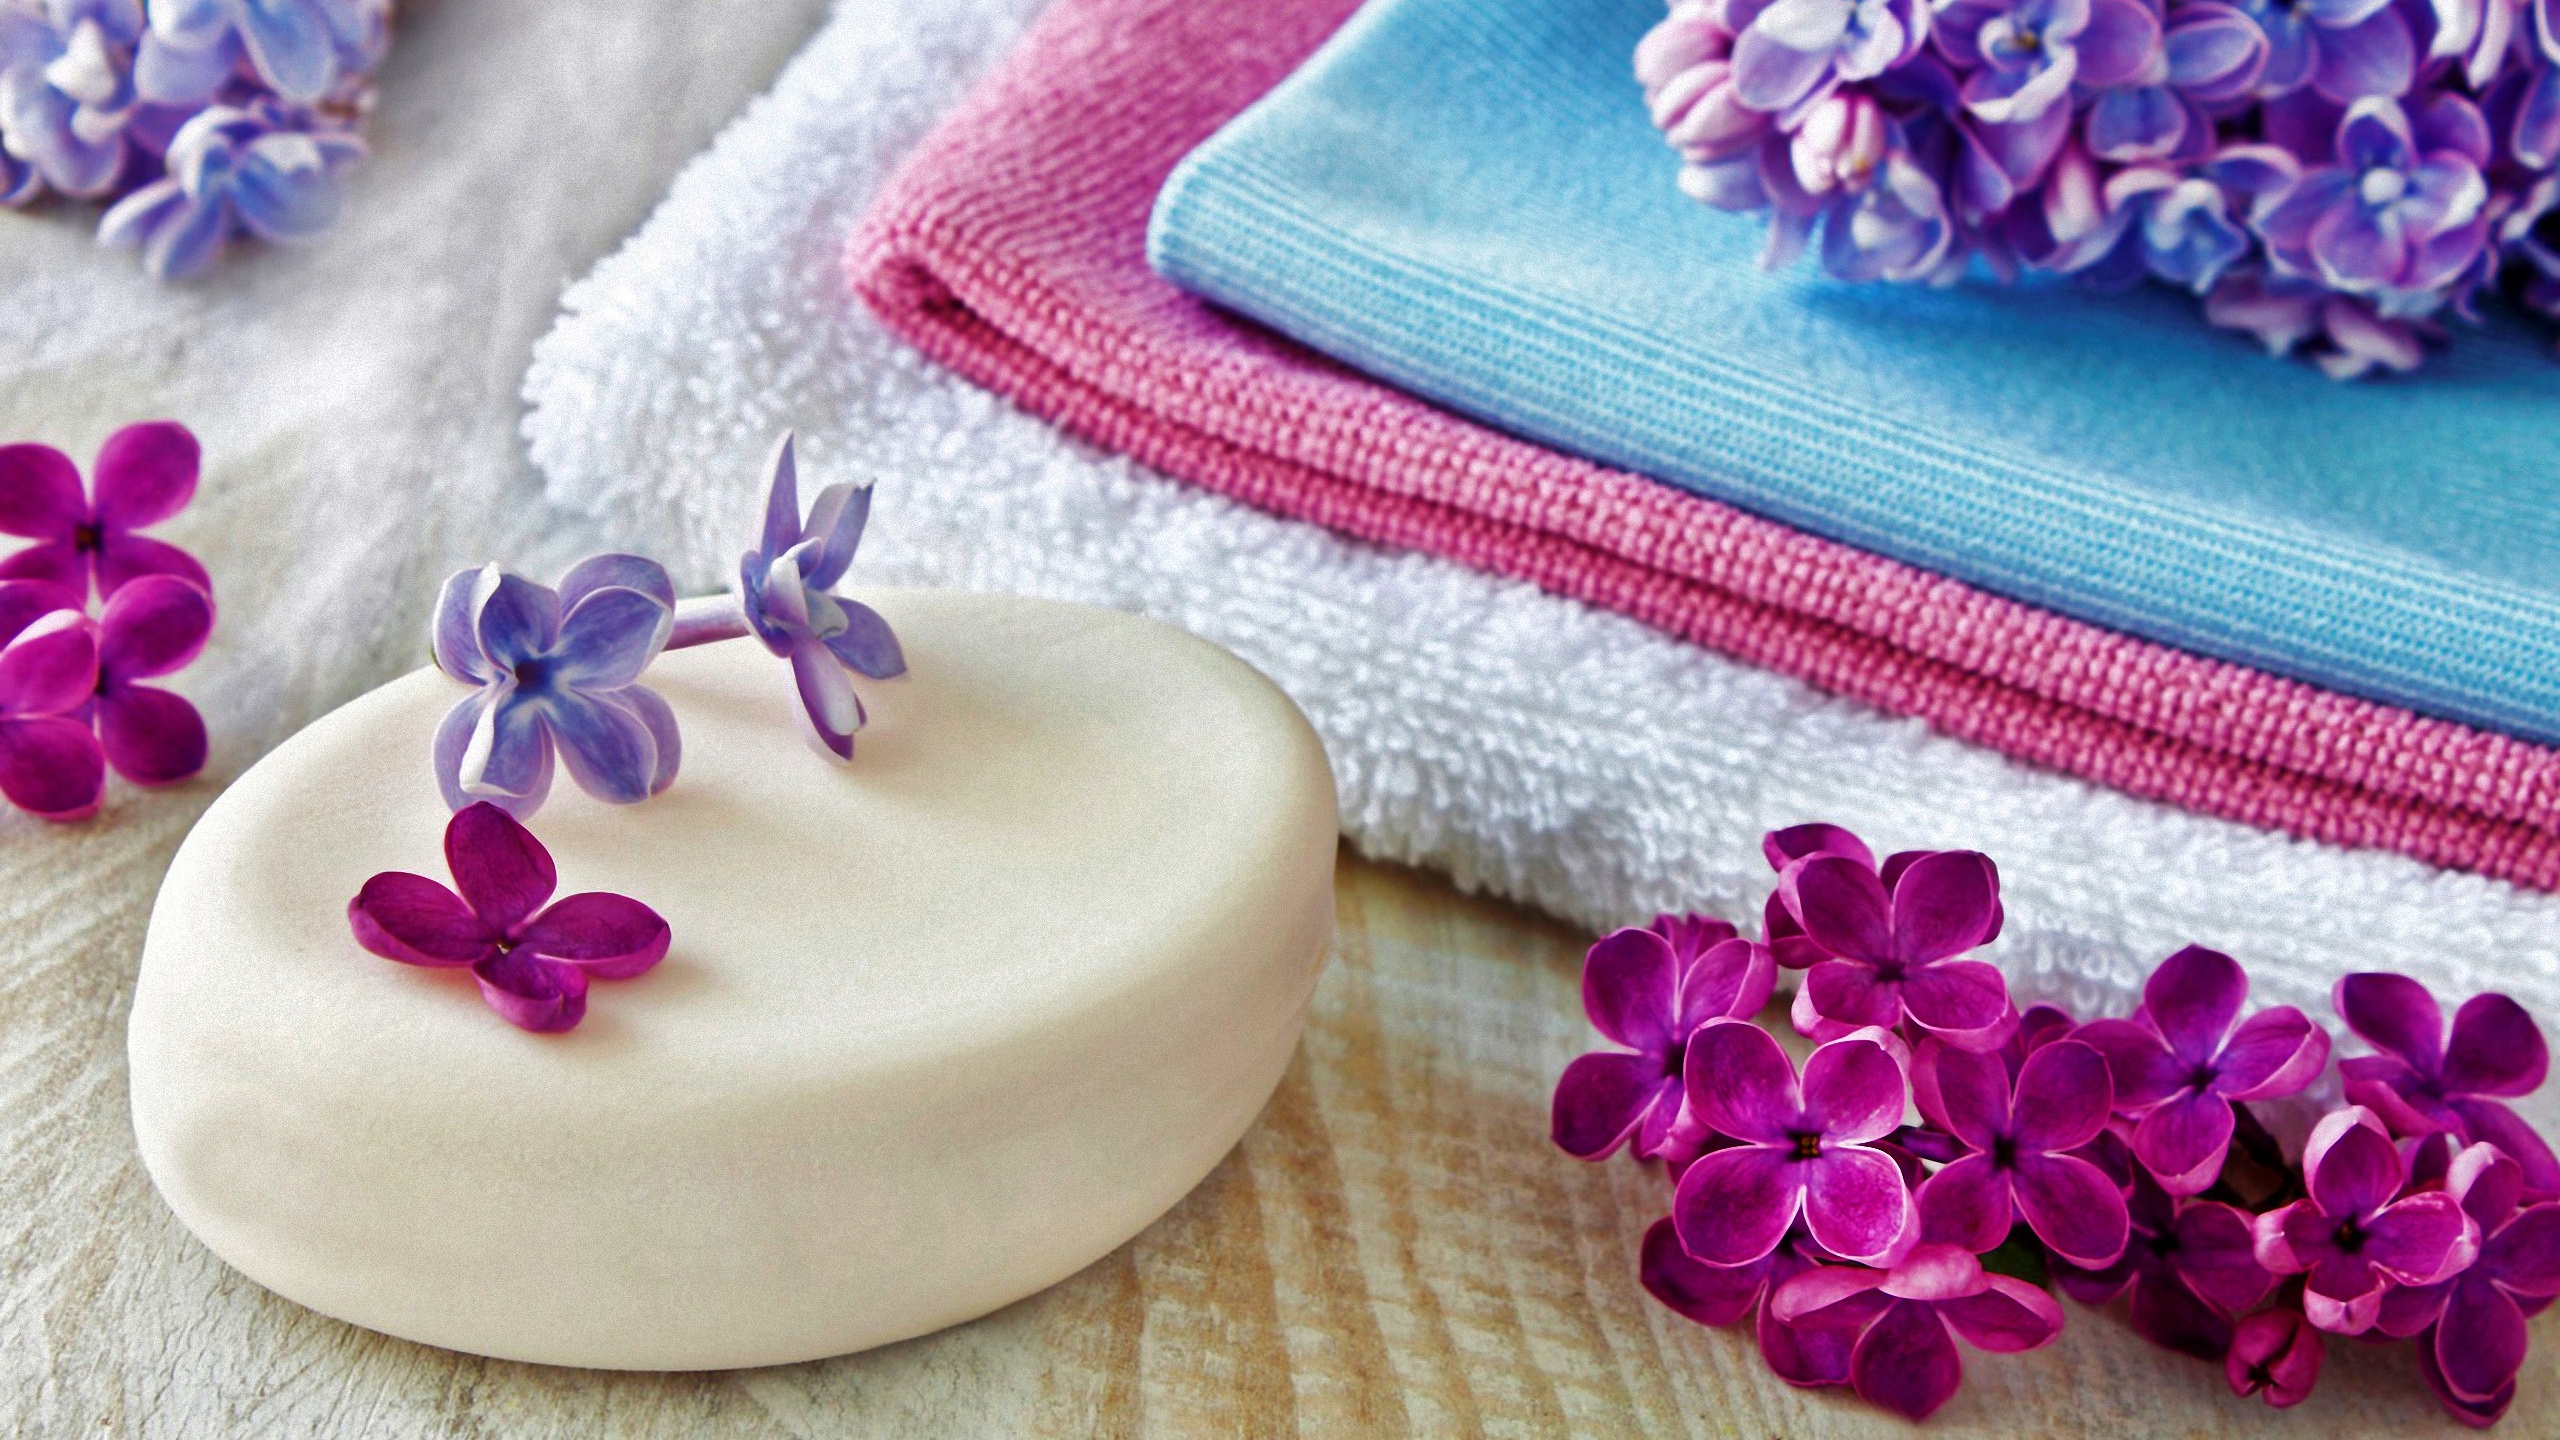 Flower Close Up Towel Spa Soap Lilac 2560x1440